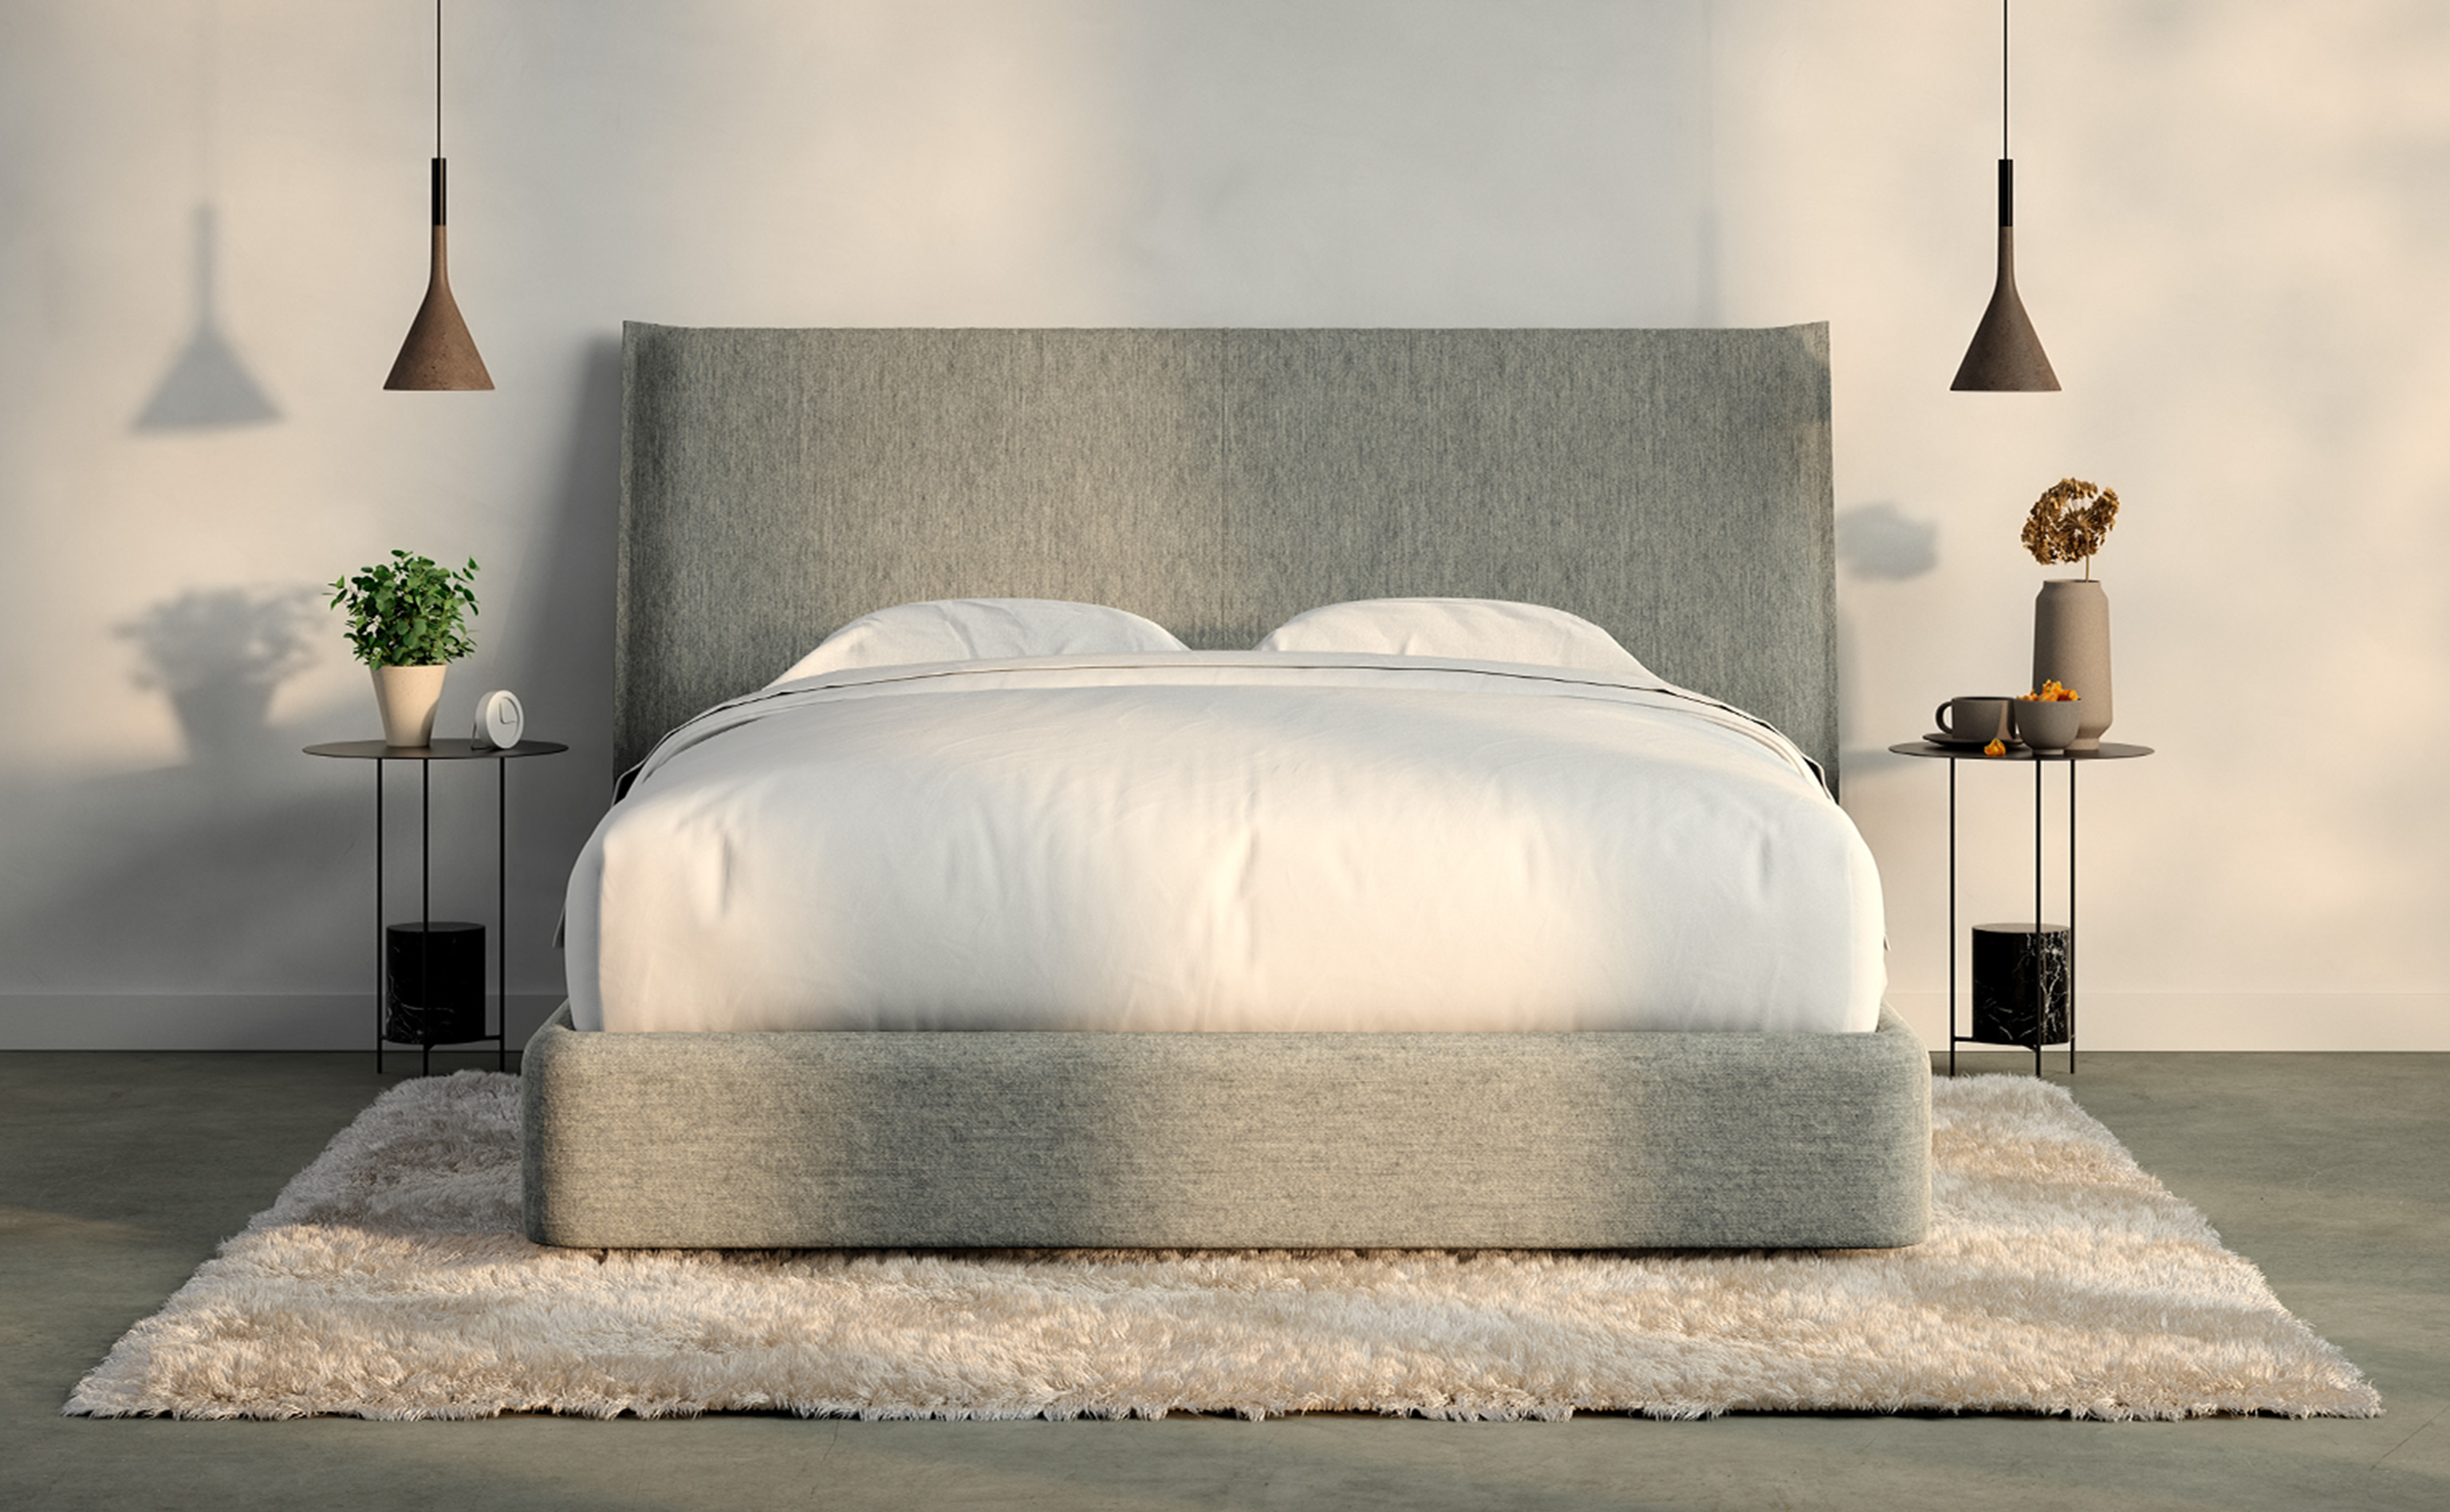 Casper Haven Upholstered Bed Frame And, How To Put Together King Bed Frame